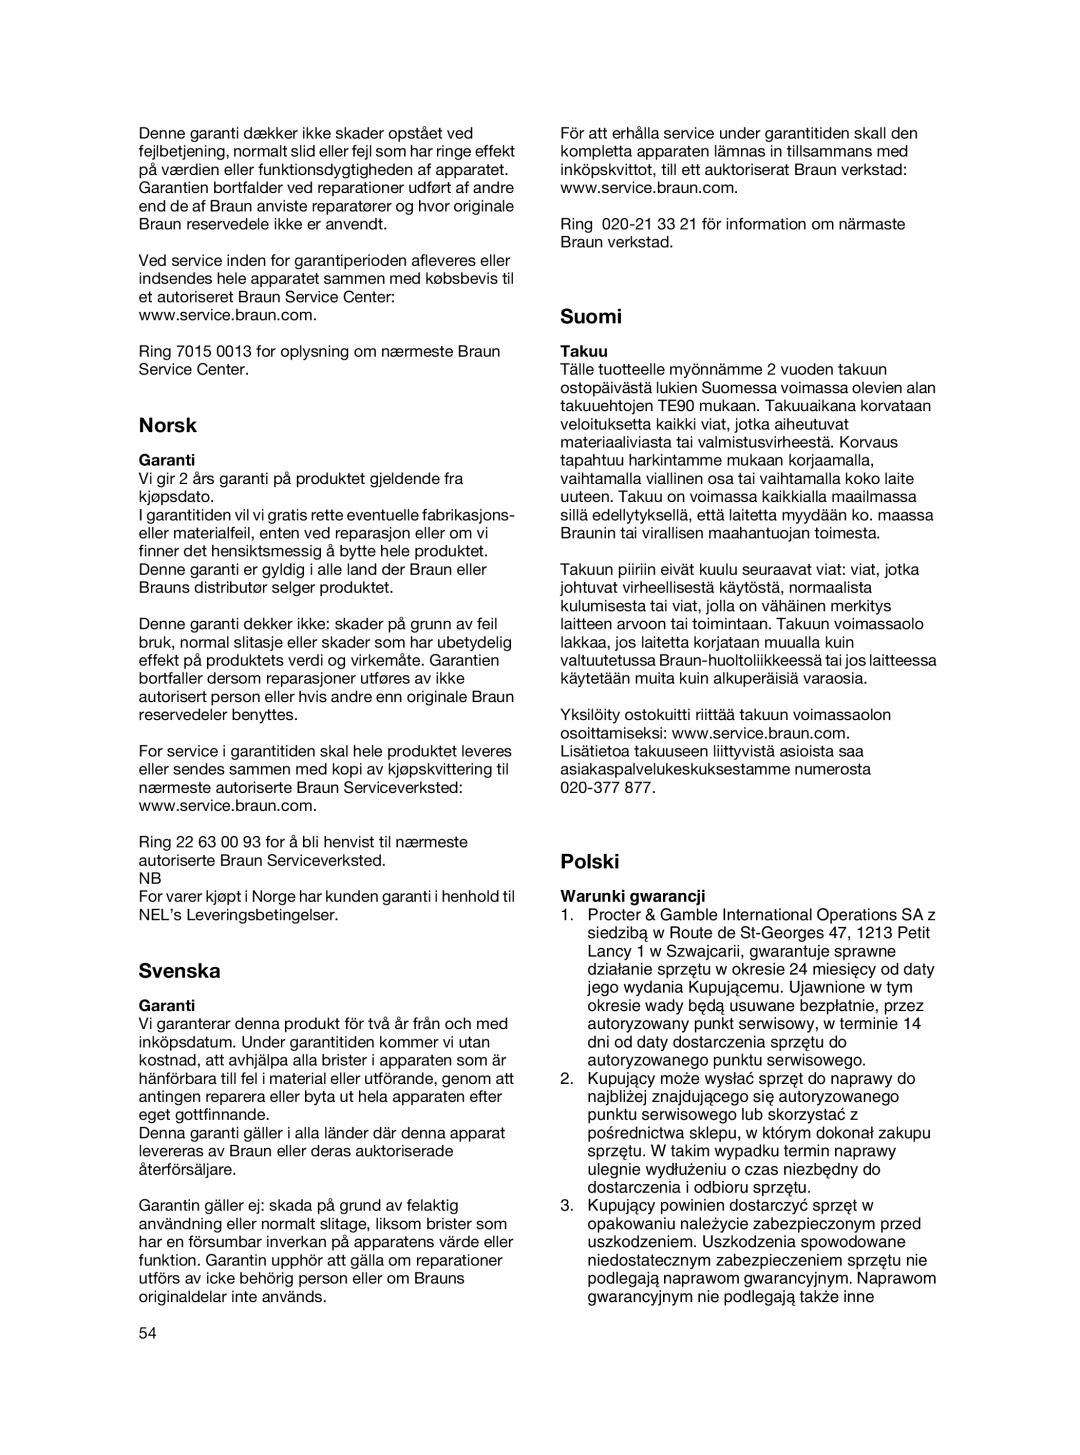 Braun MX 2050 BLACK manual Norsk, Svenska, Suomi, Polski, Garanti, Takuu, Warunki gwarancji 